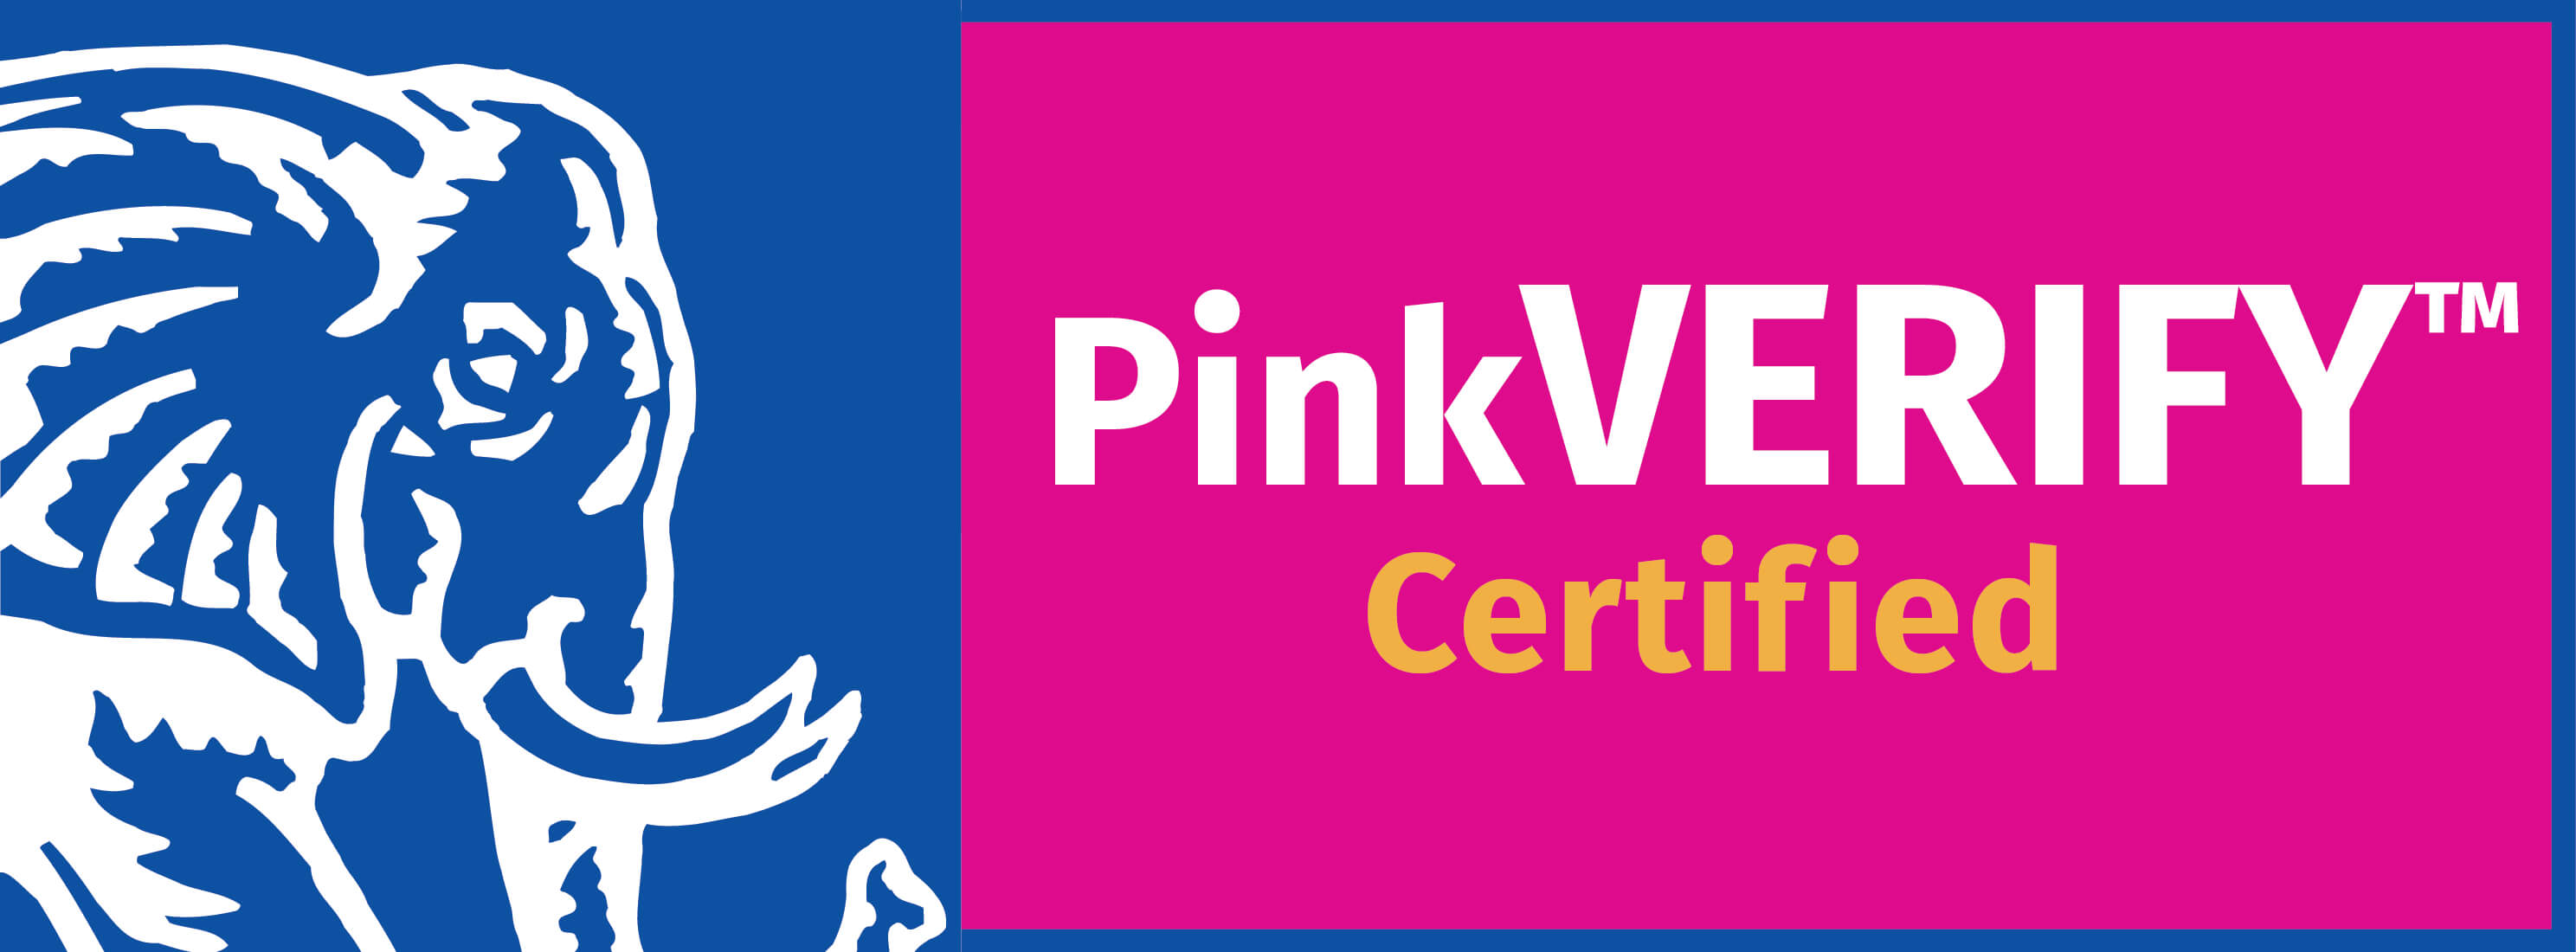 Logotipo da PinkVERIFY